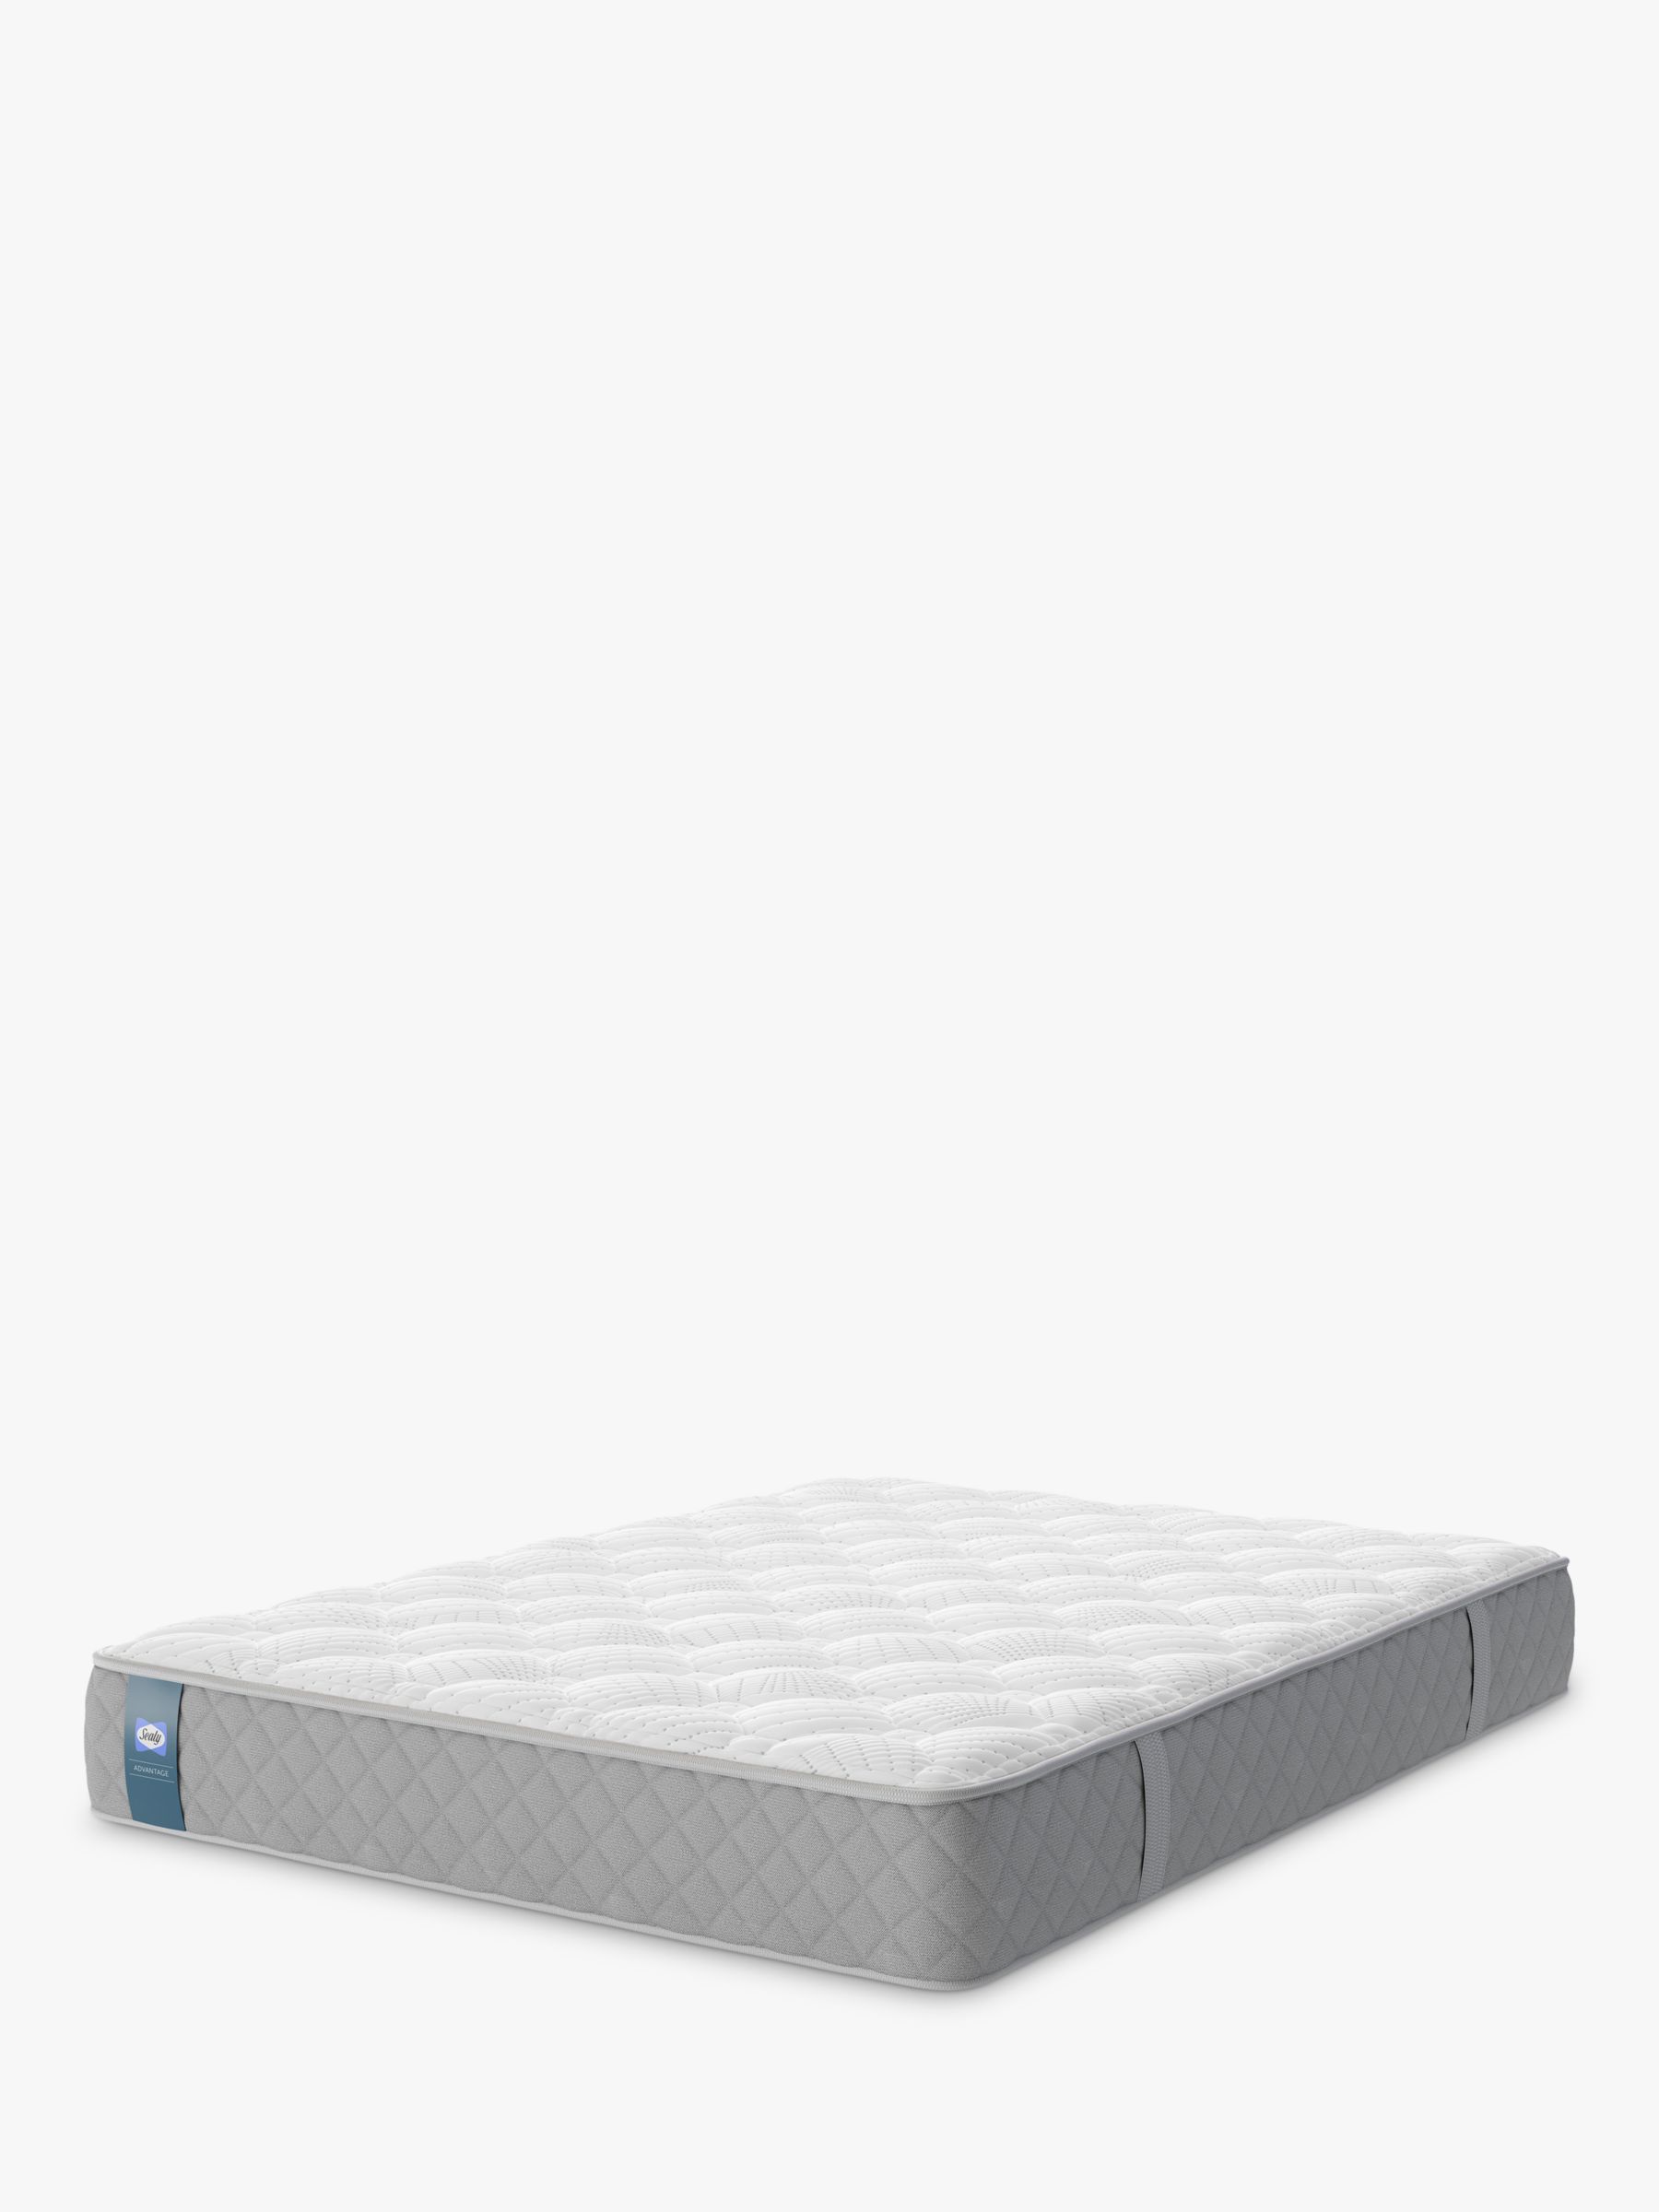 Photo of Sealy advantage upton mattress regular/firmer tension king size